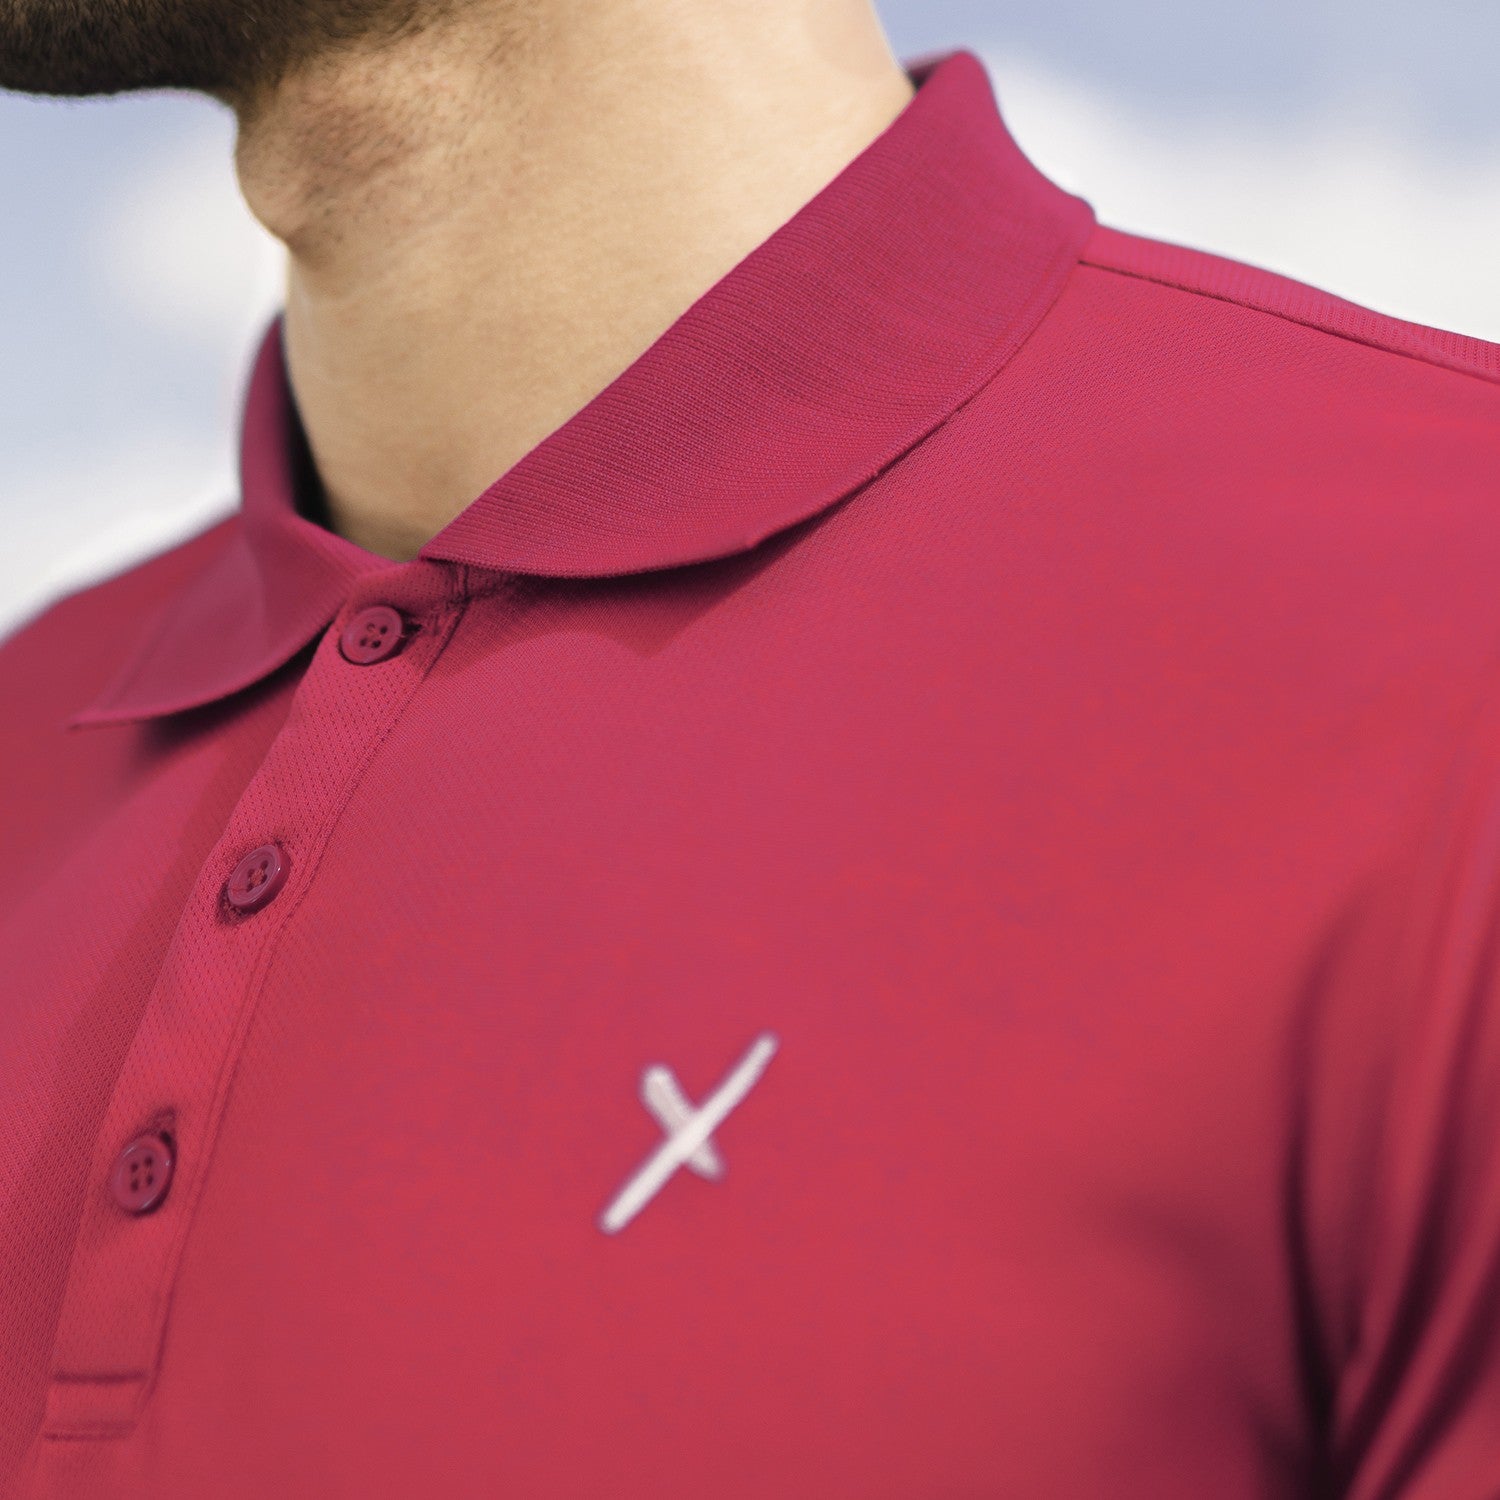 Cflex Activewear half sleeve Polo shirt-MPLO-2001-Red - FactoryX.pk